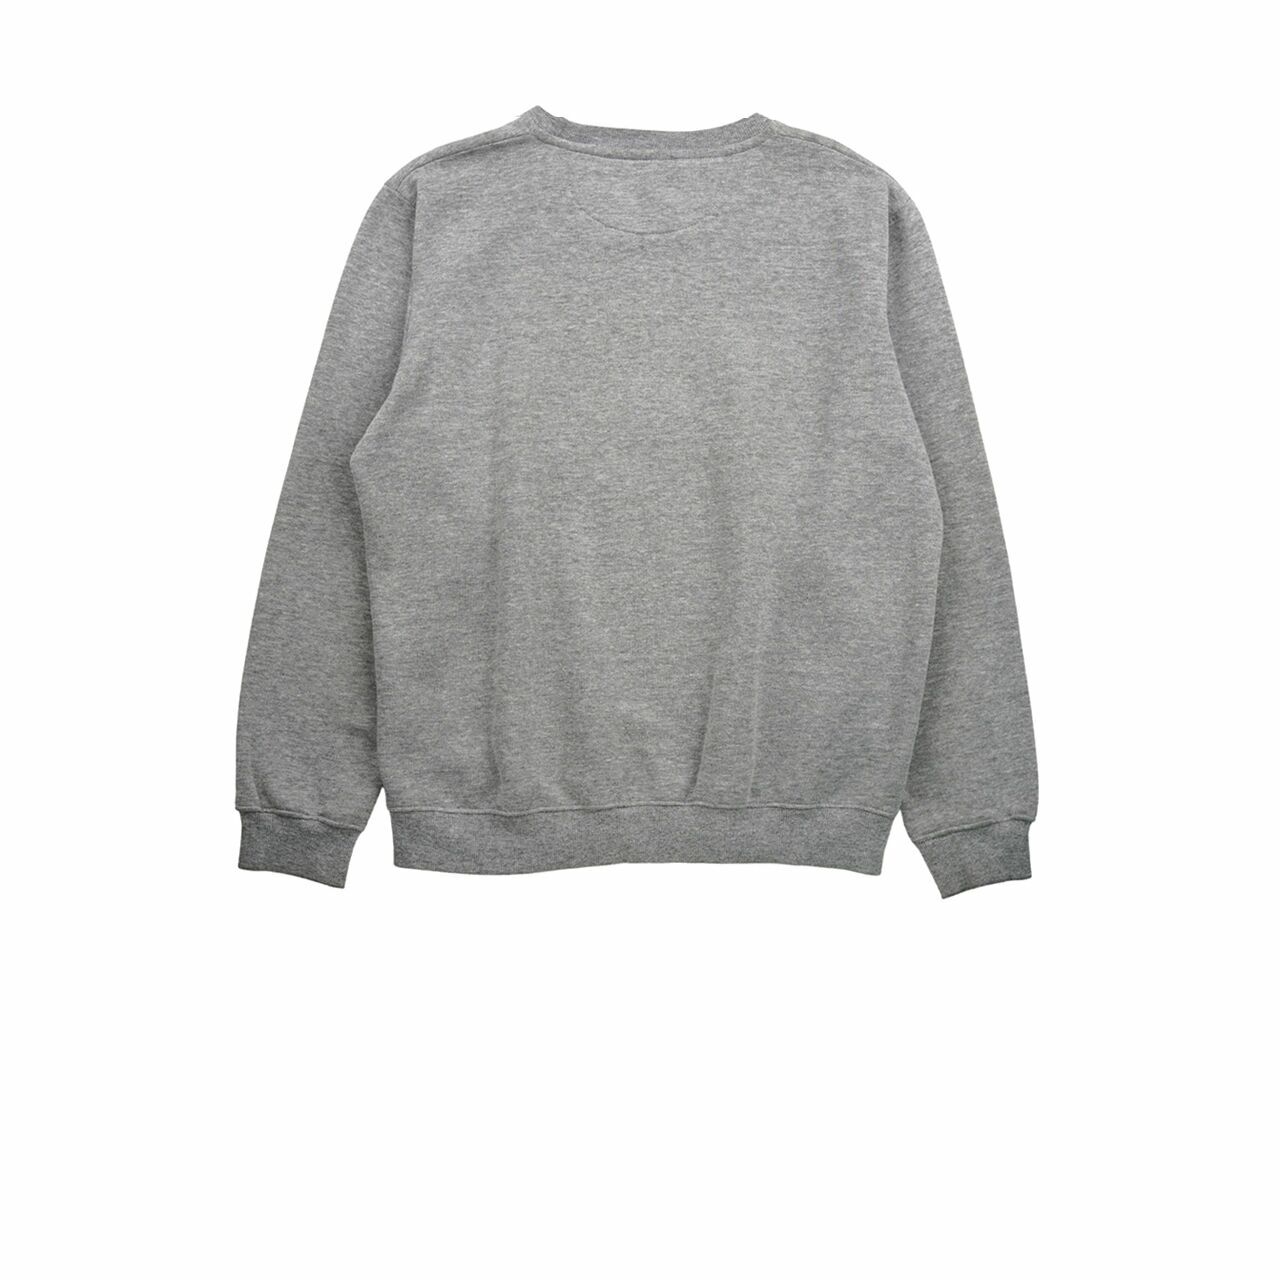 Fila x Gosha Grey Rubchinskiy Sweatshirt